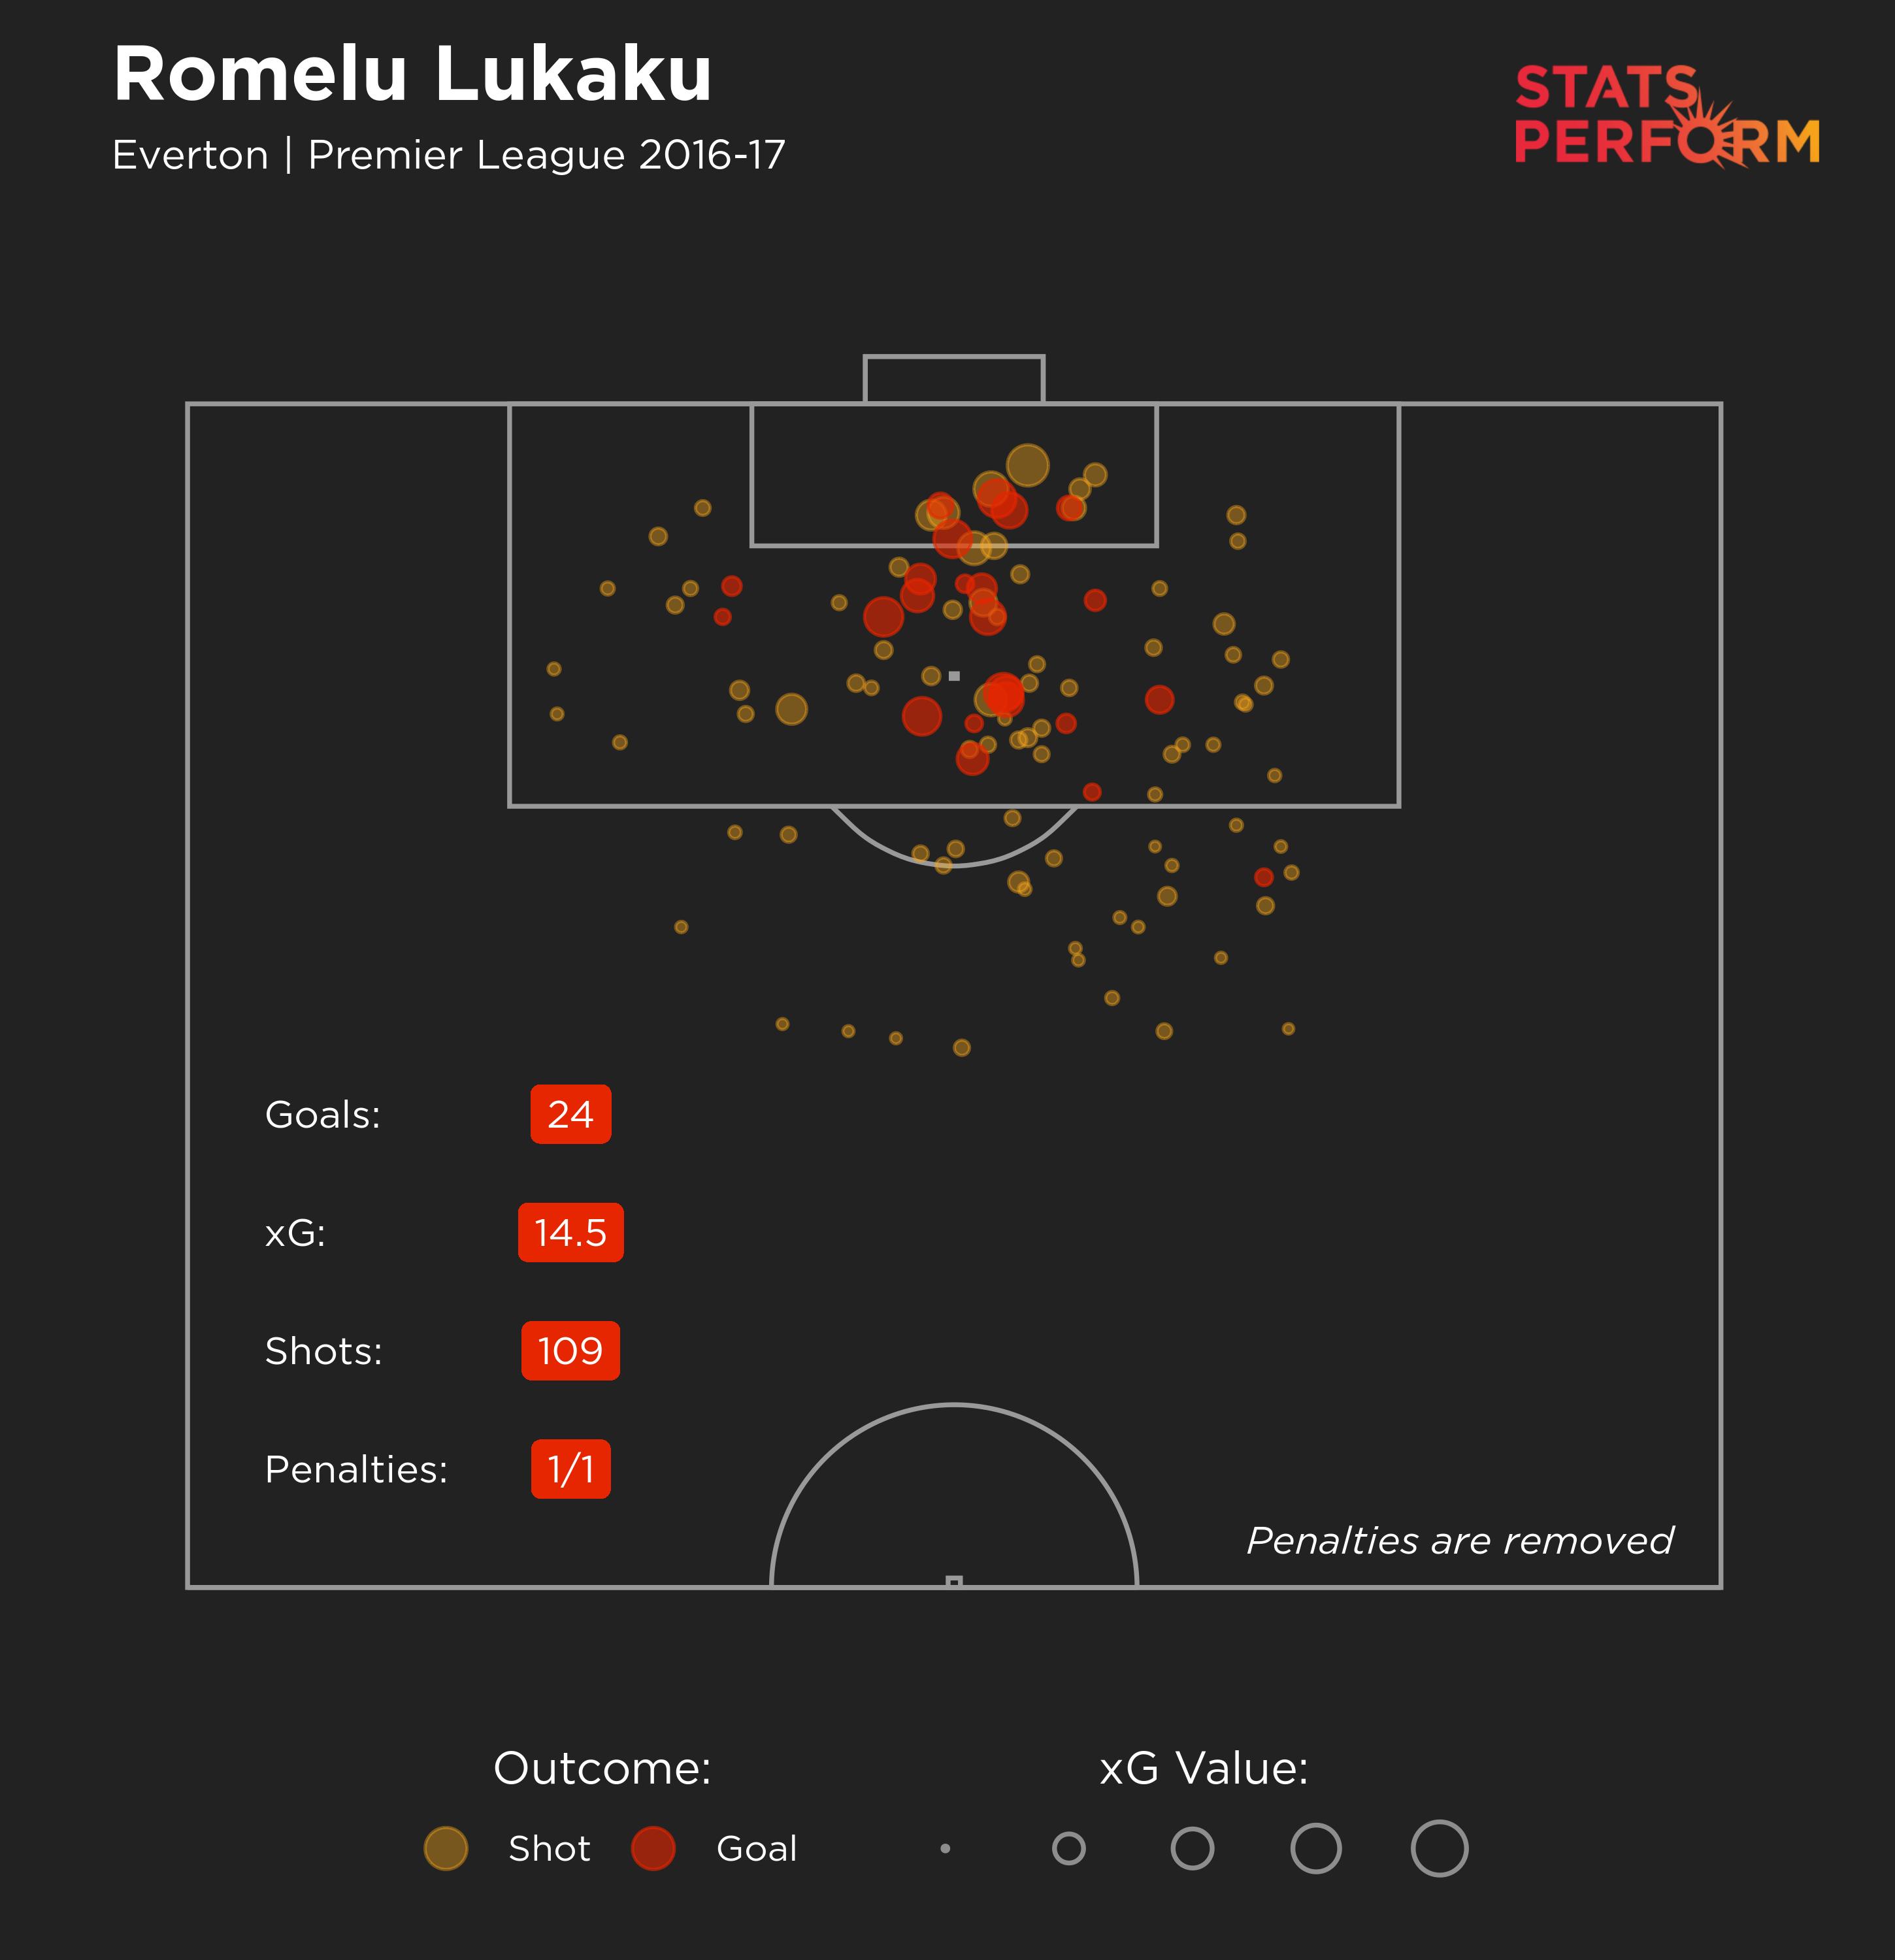 Romelu Lukaku's outstanding Everton form attracted United